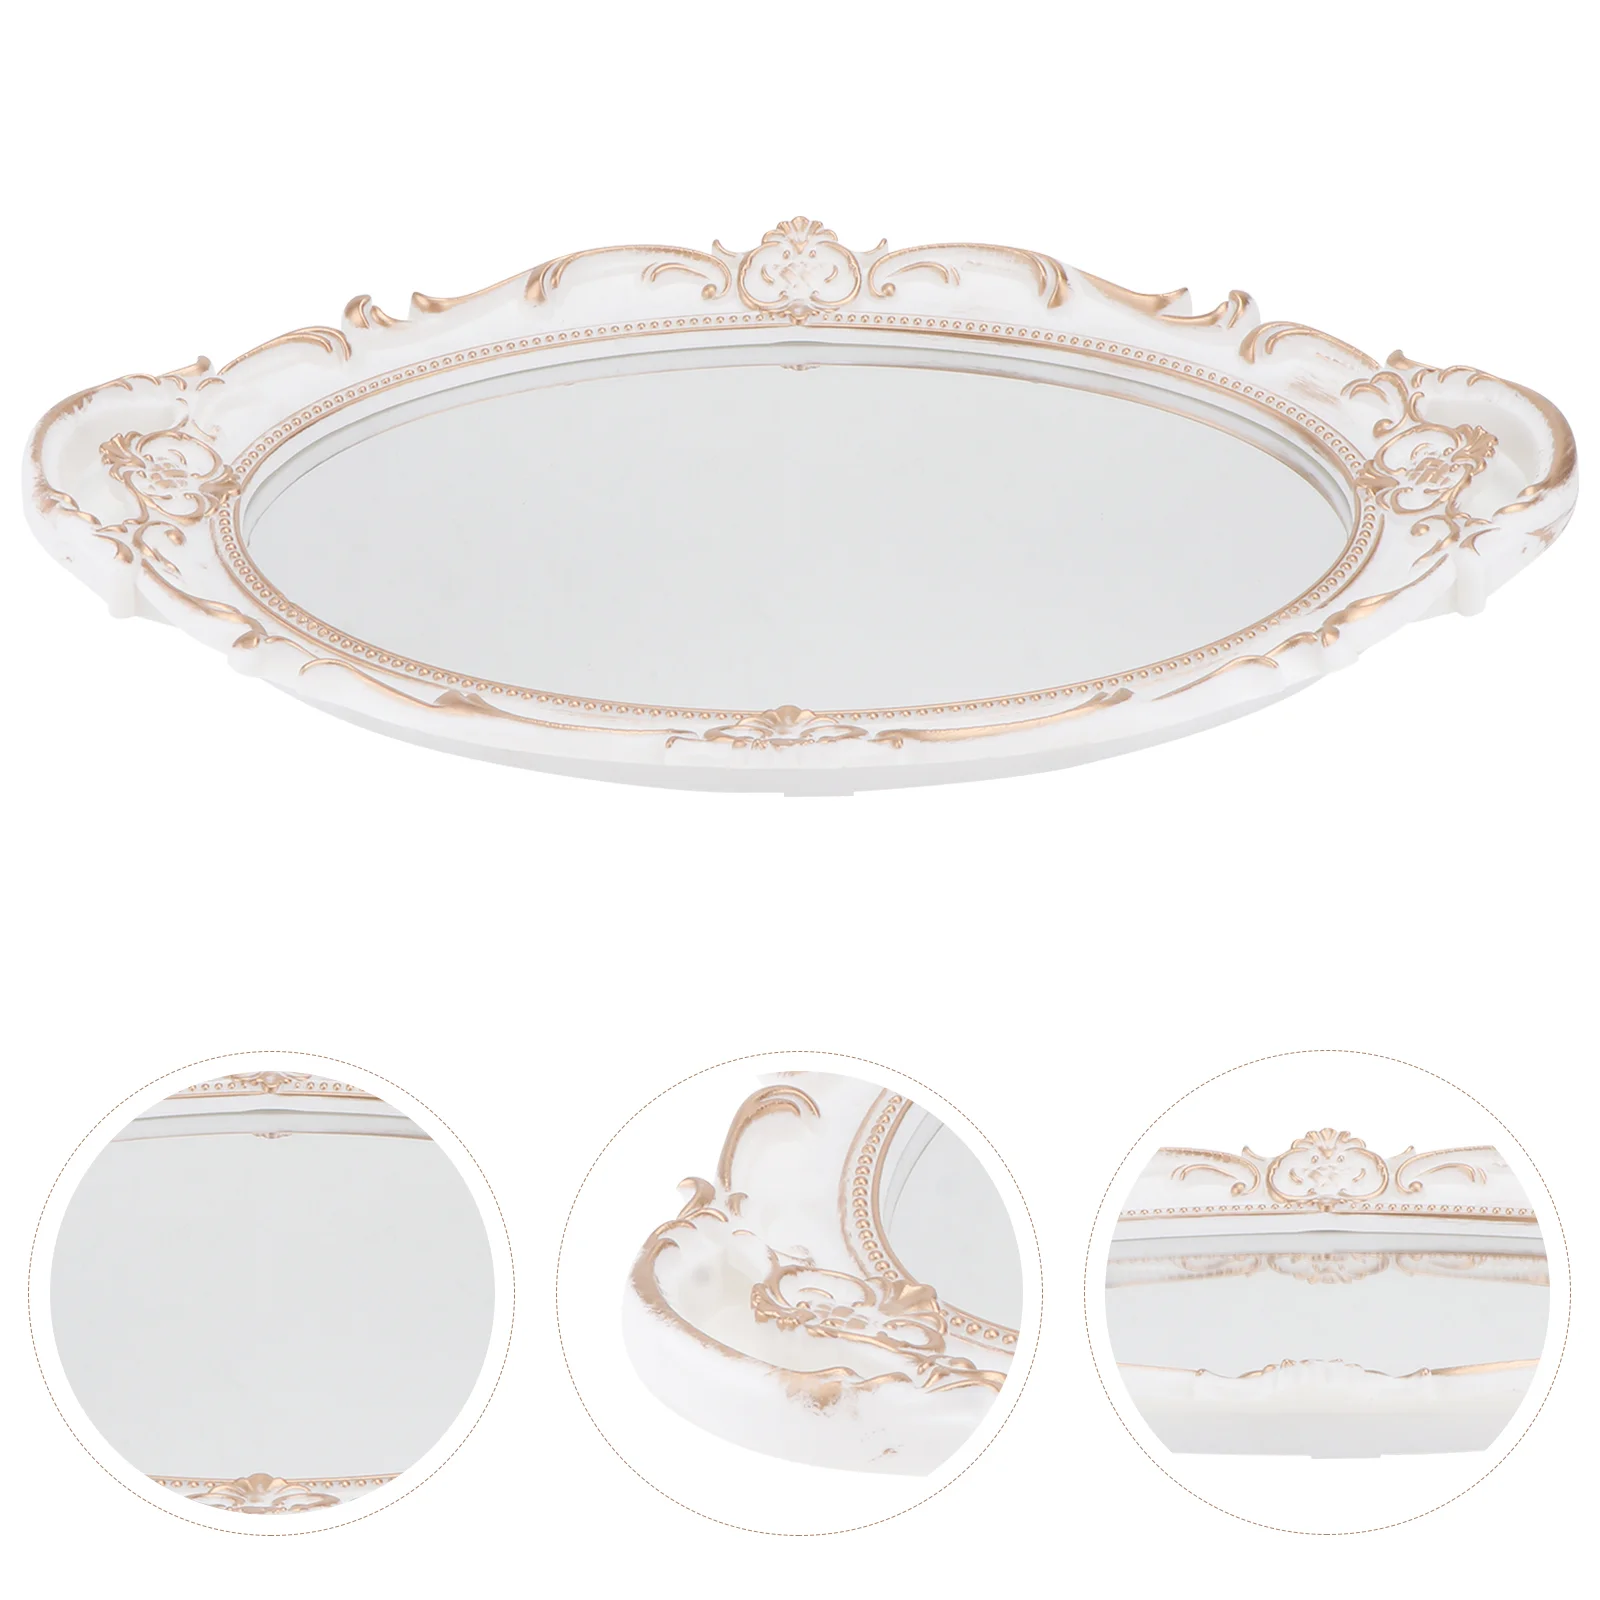 

Tray Jewelry Mirror Vanity Dish Serving Trinket Organizer Vintage Plate Display Dresser Prop Photo Mirrored Decorative Storage